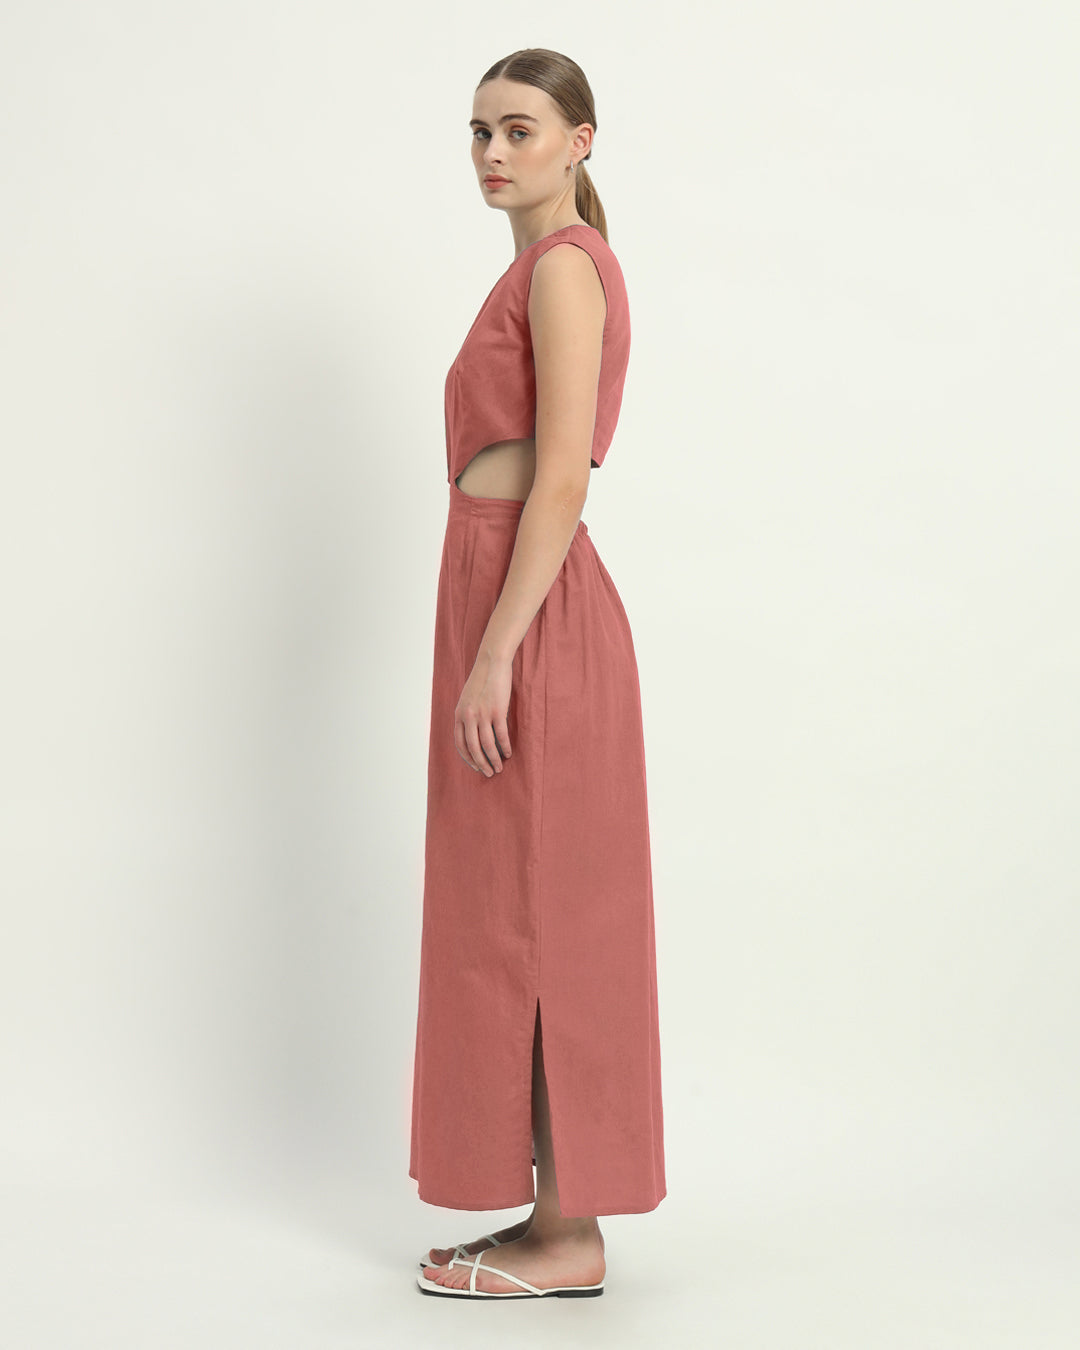 The Livingston  Ivory Pink  Cotton Dress